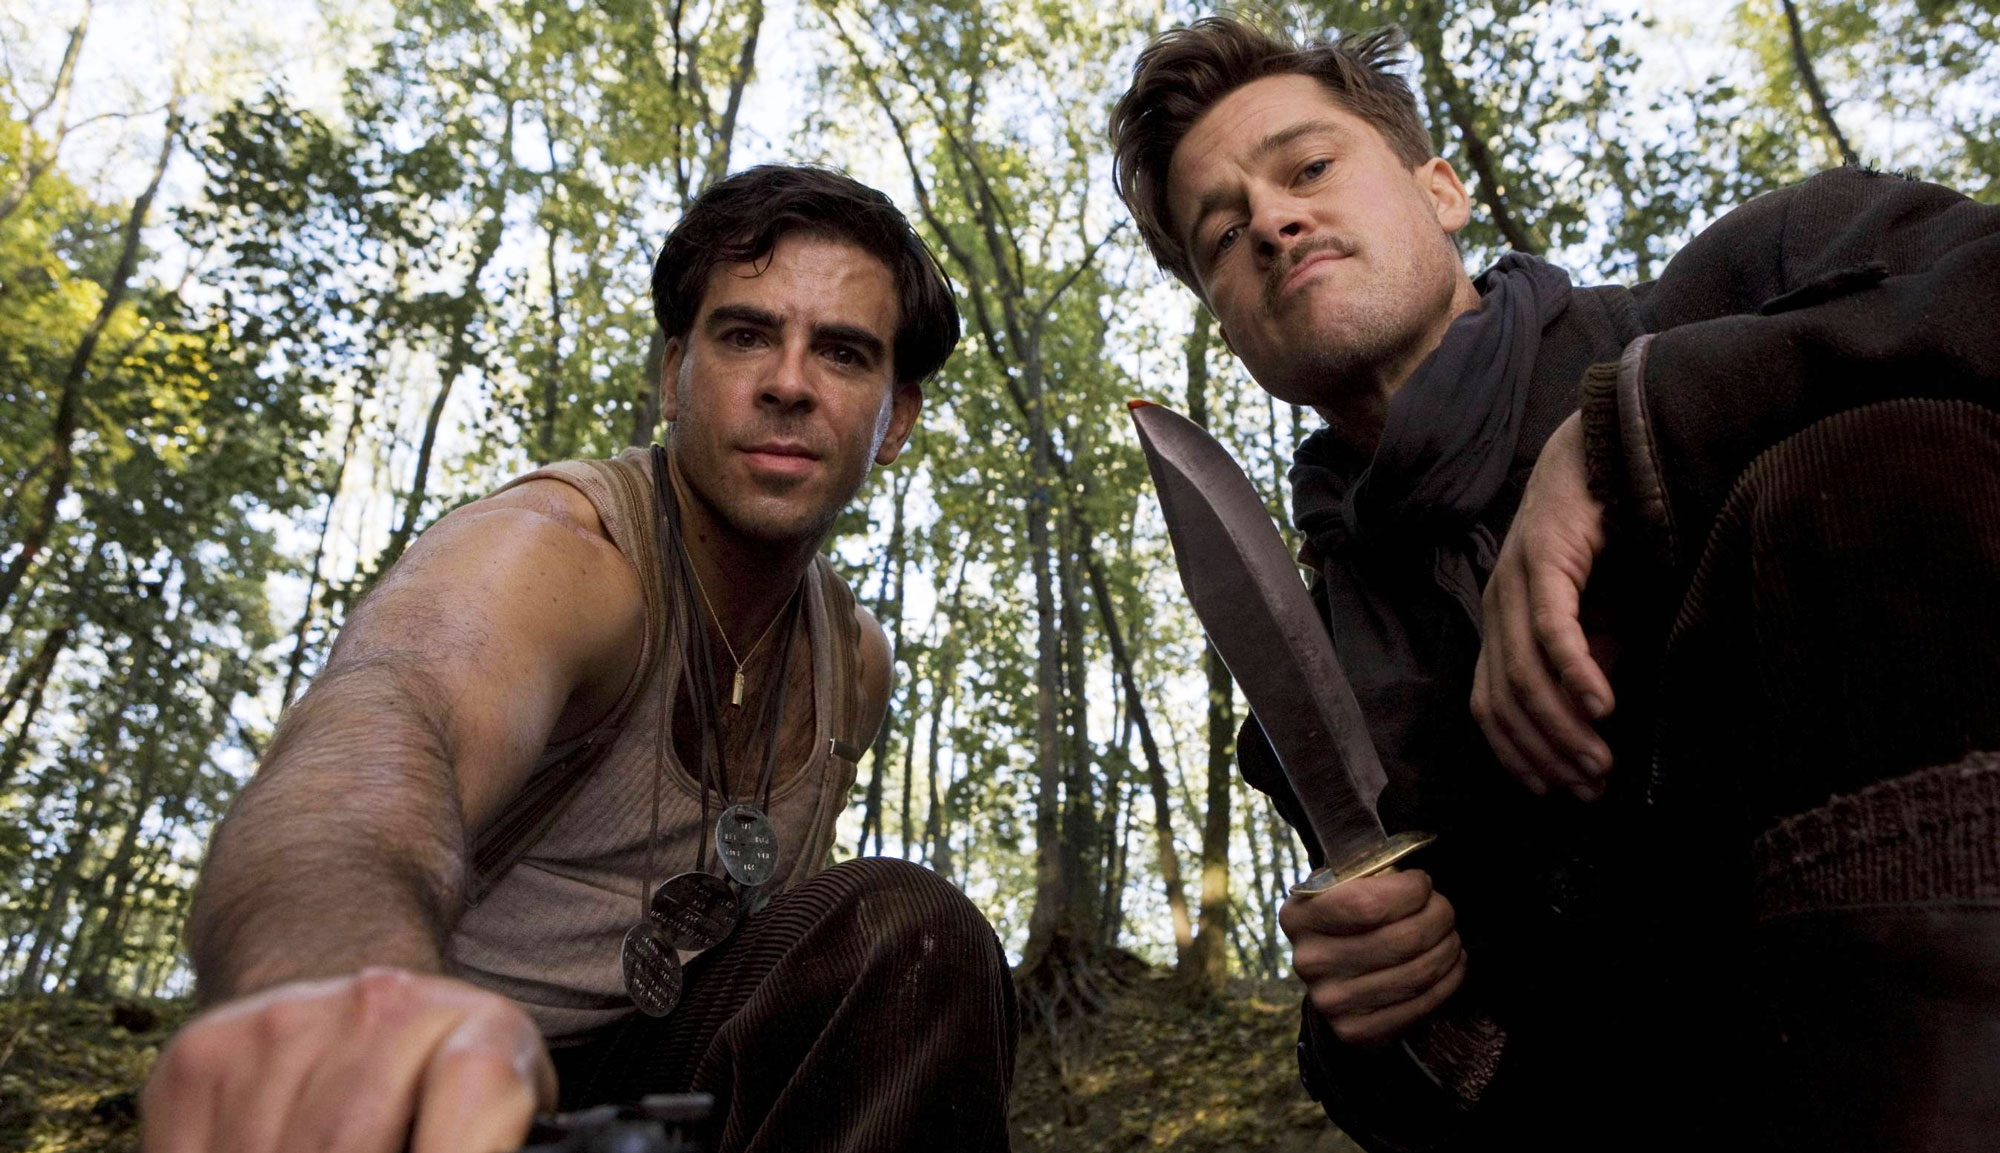 Brad Pitt and Eli Roth in "Inglourious Basterds"